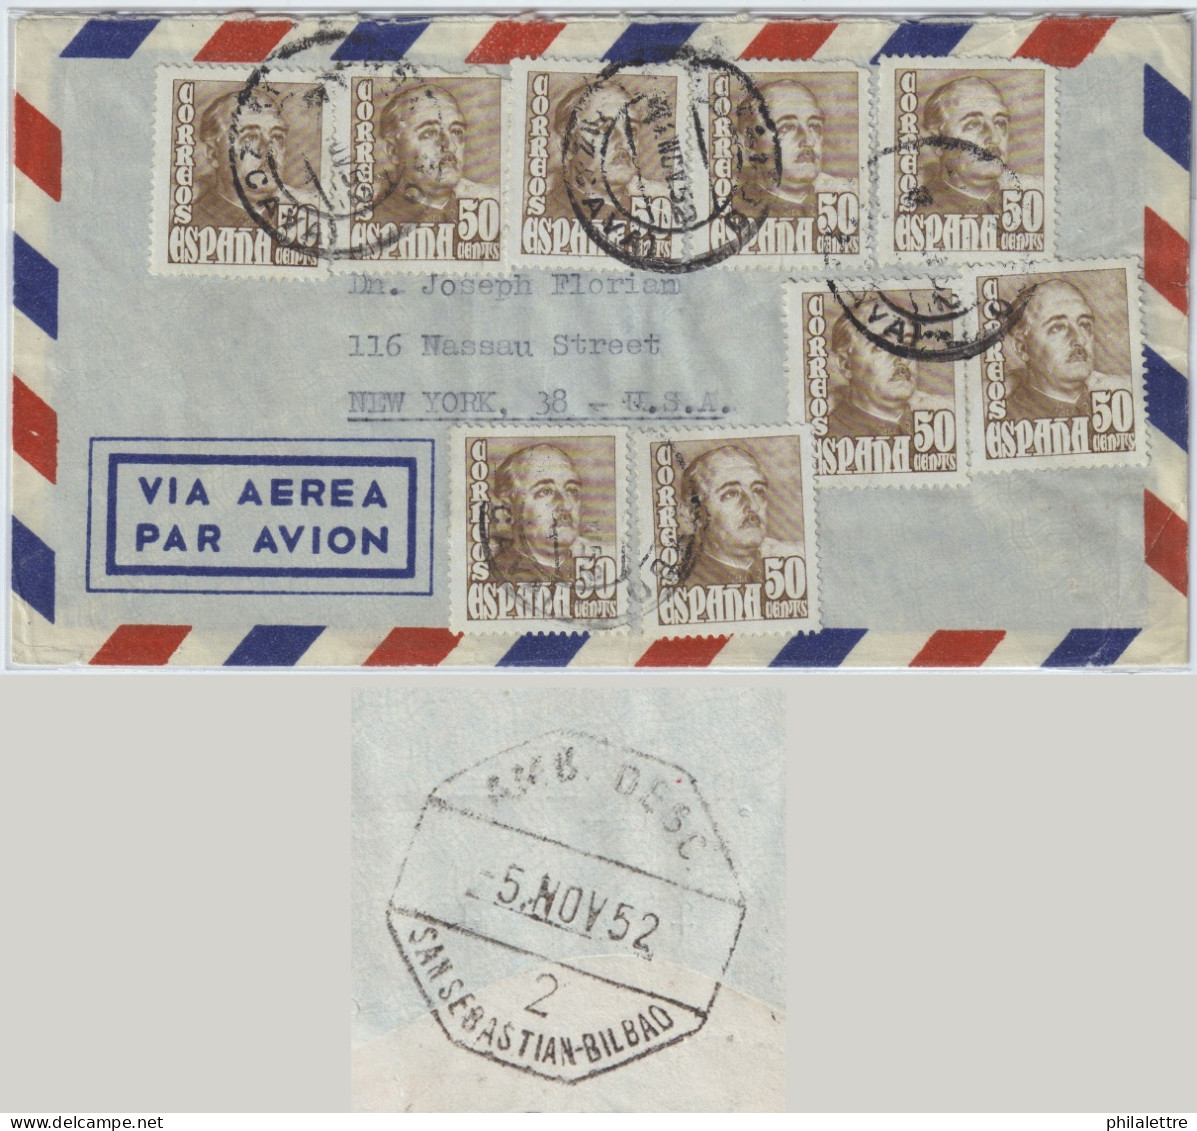 ESPAGNE / ESPAÑA - 1952 9x Ed.1022 En Carta Por Avion De Bilbao A Nueva York, EE.UU. (Matasello Ambulante Al Dorso) - Storia Postale